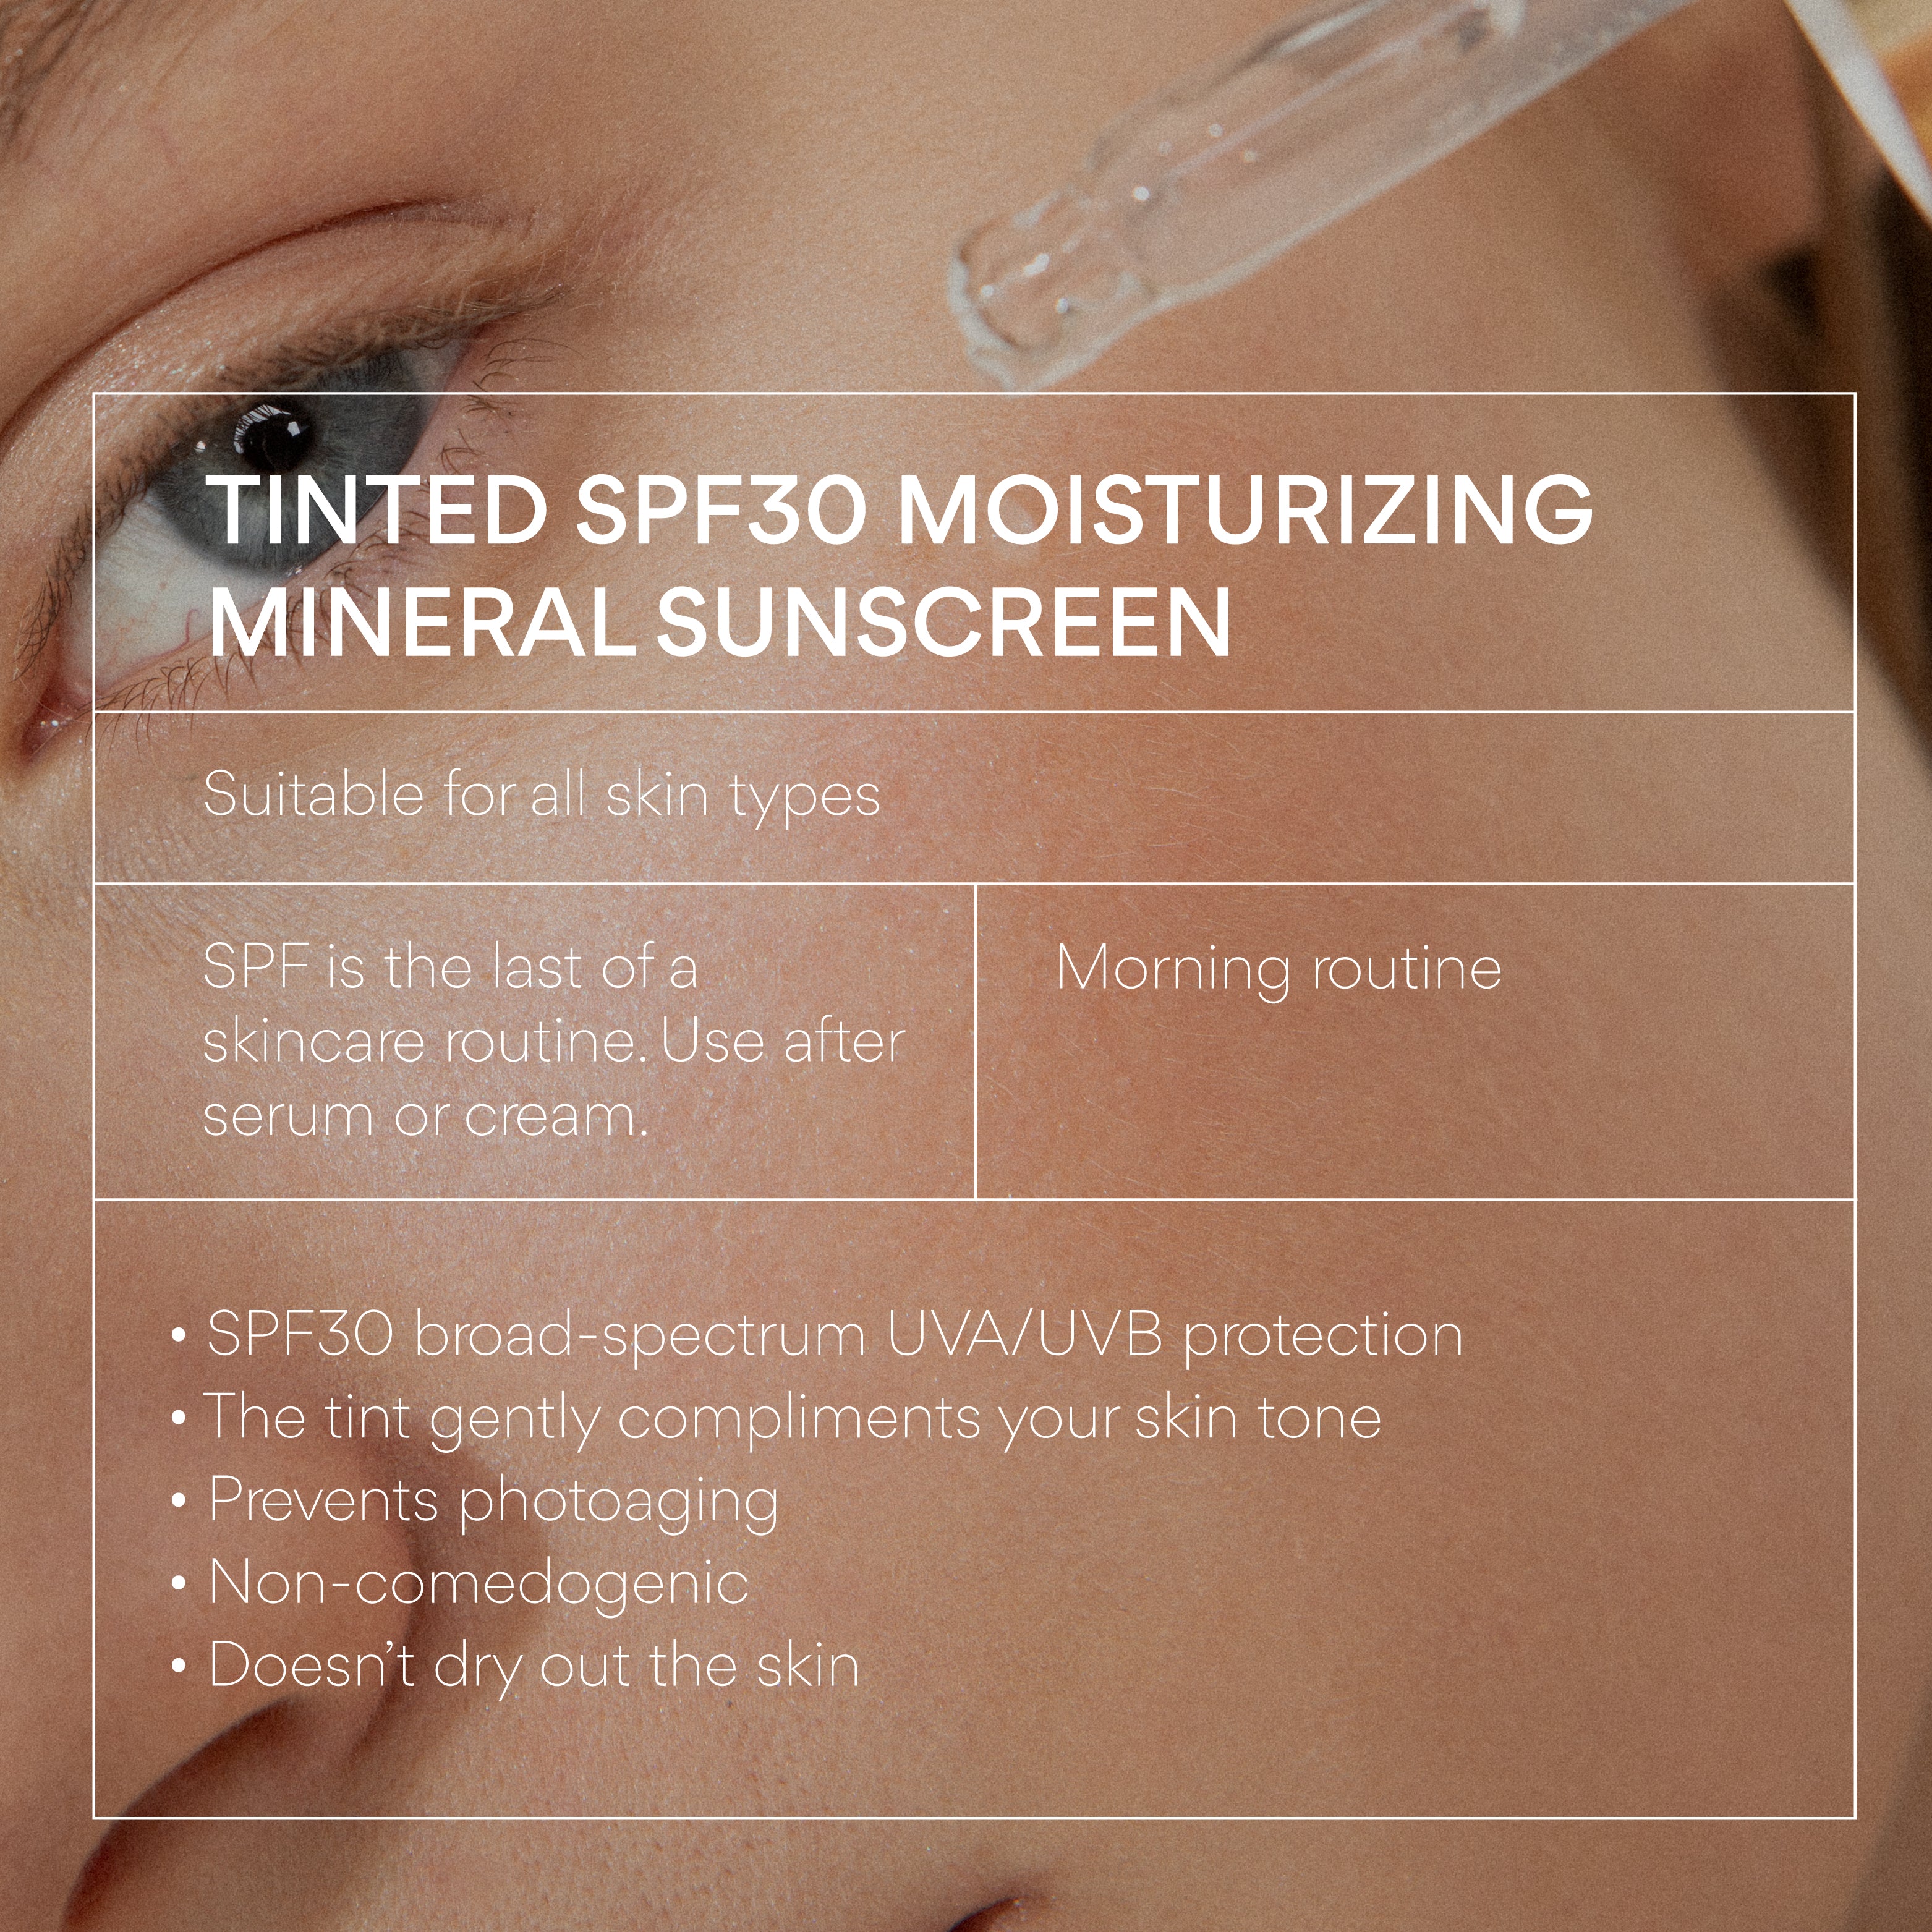 Tinted SPF30 Moisturizing Mineral Sunscreen